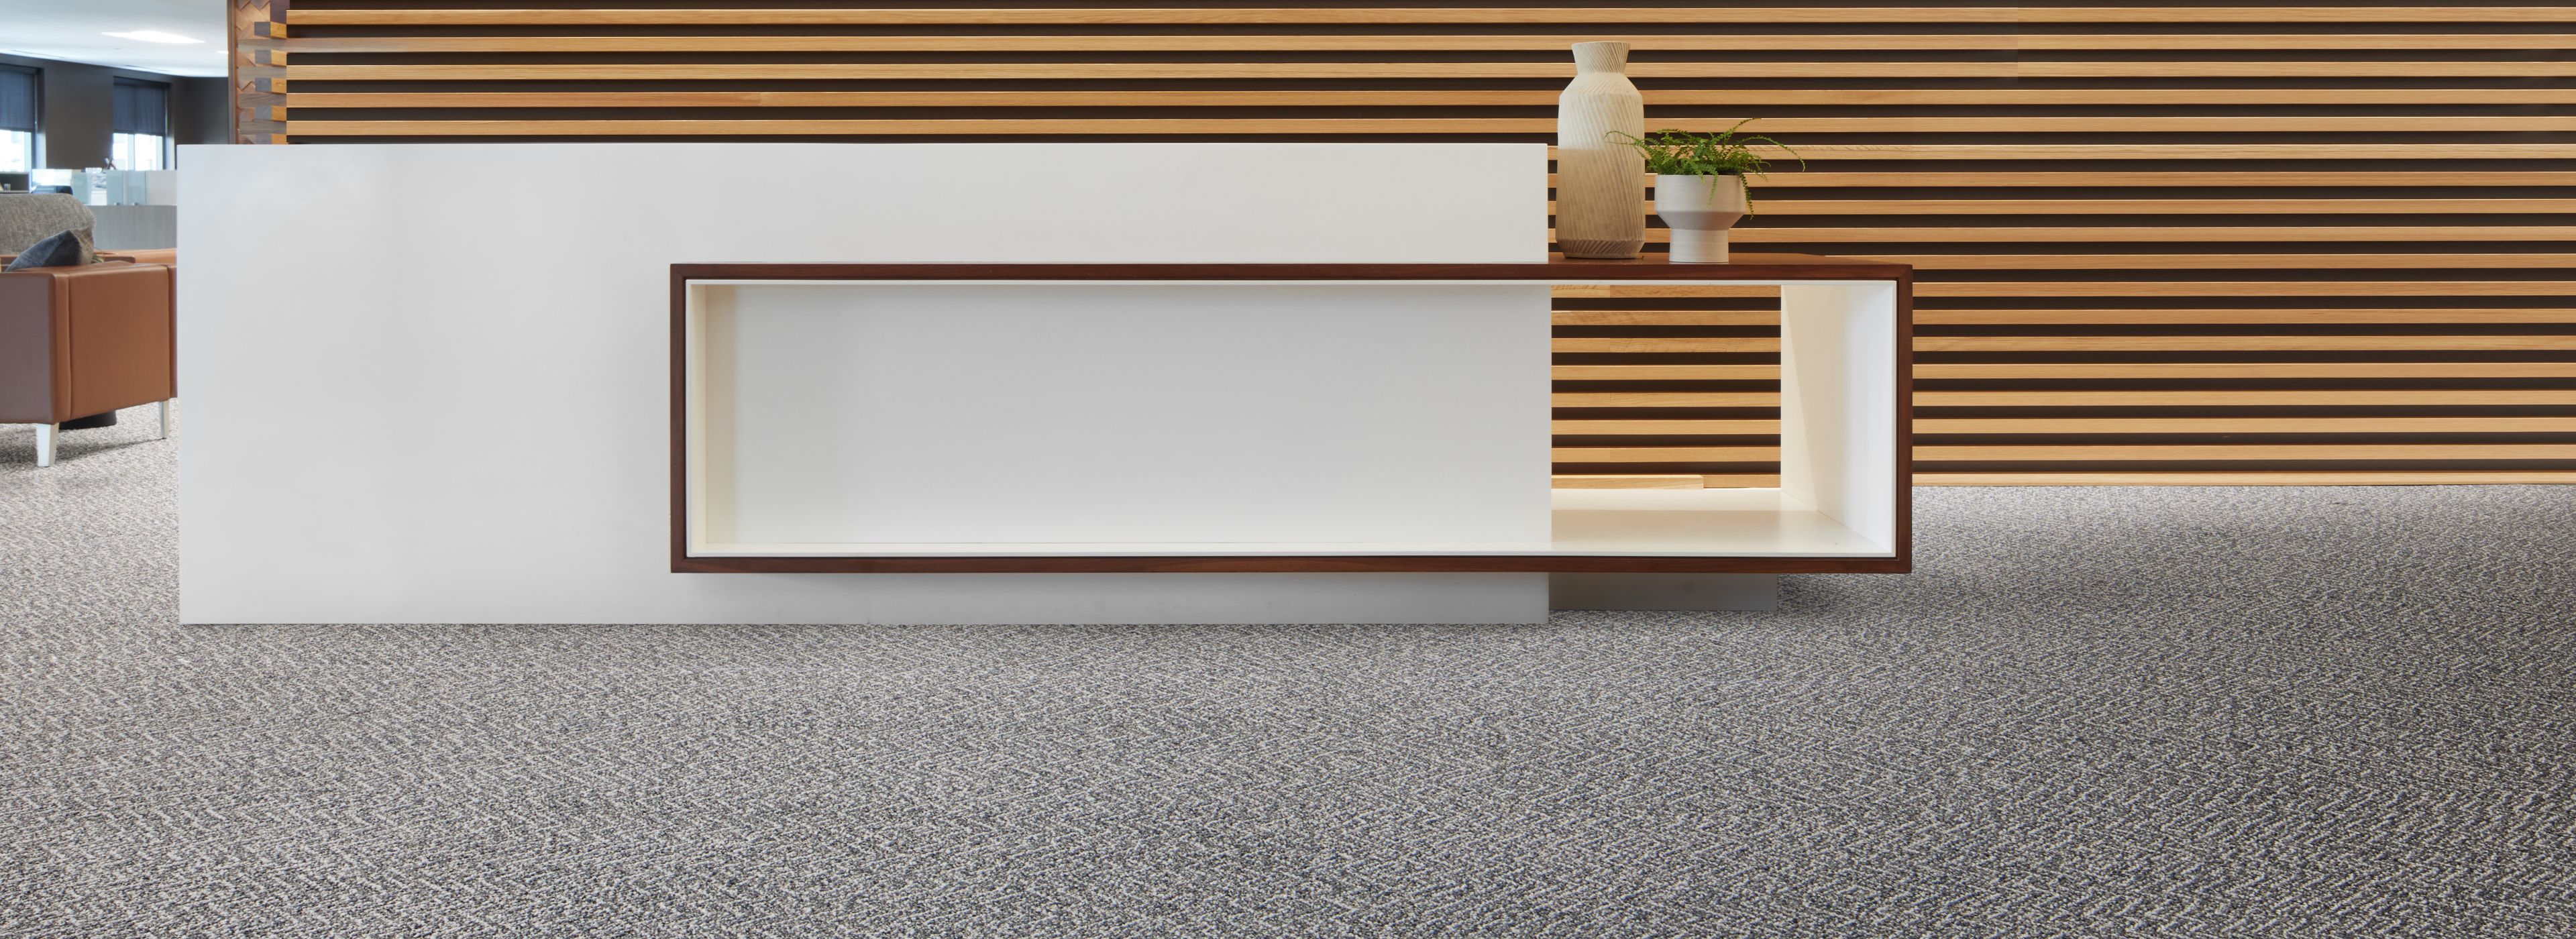 Interface Third Space 308 plank carpet tile in reception area imagen número 1